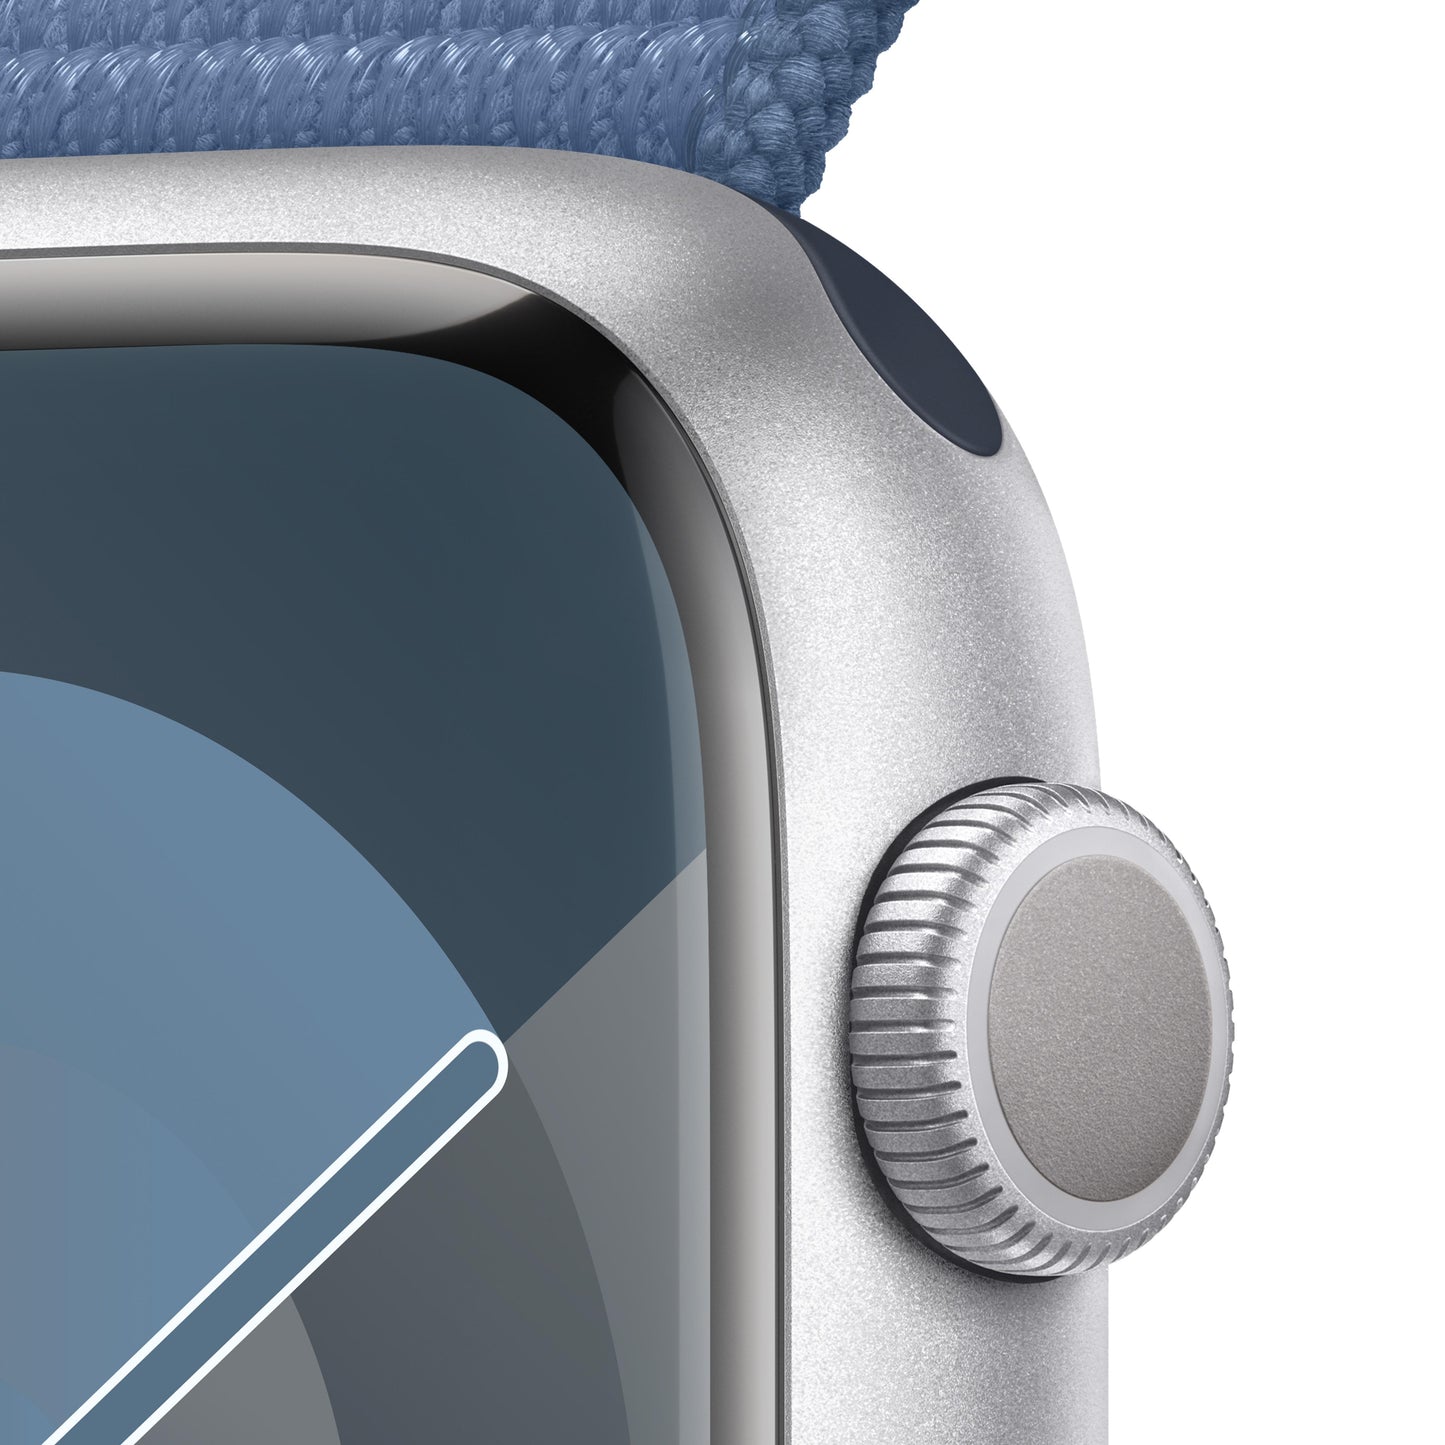 Apple Watch Series 9 GPS 45mm Silver Aluminum Case with Winter Blue Sport Loop